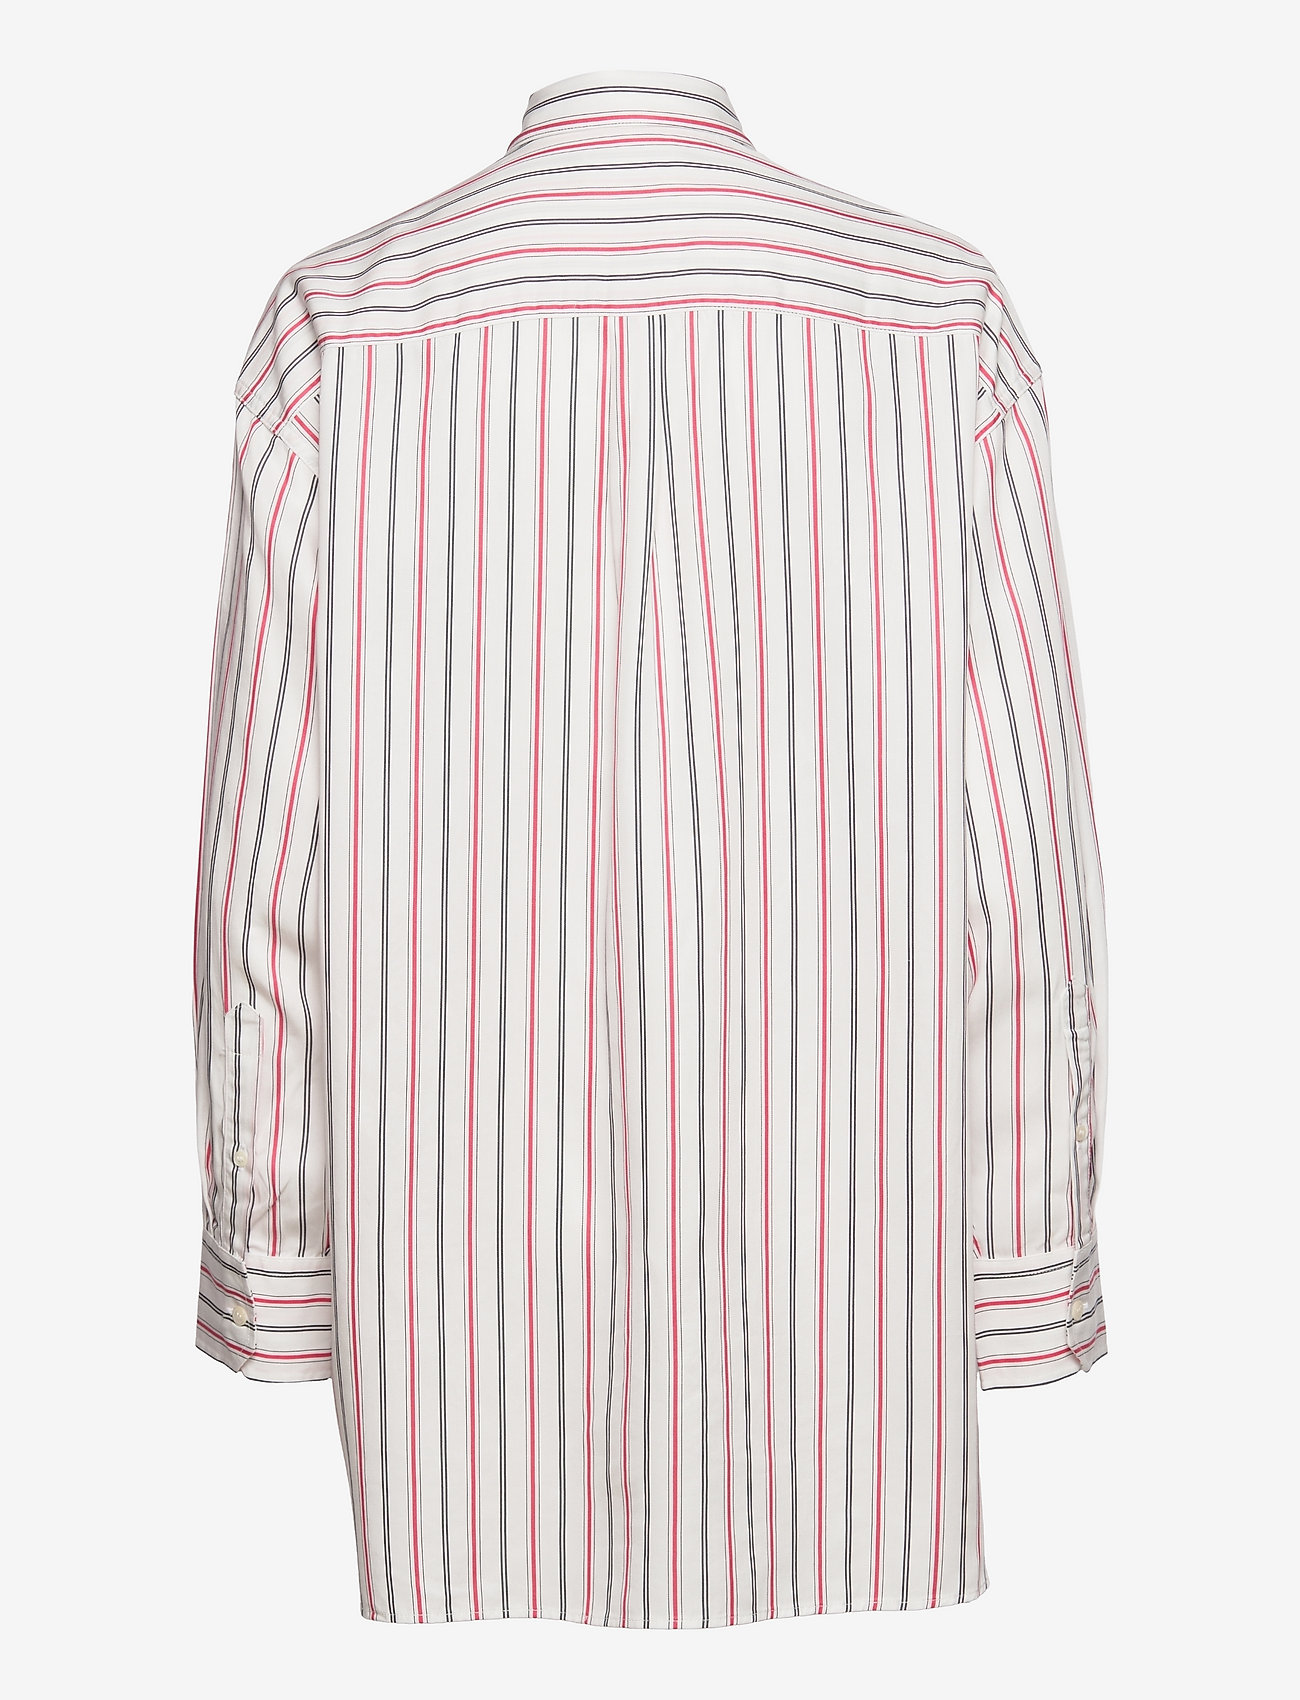 Soulland - Estelle shirt - langærmede skjorter - white/red stripes - 1